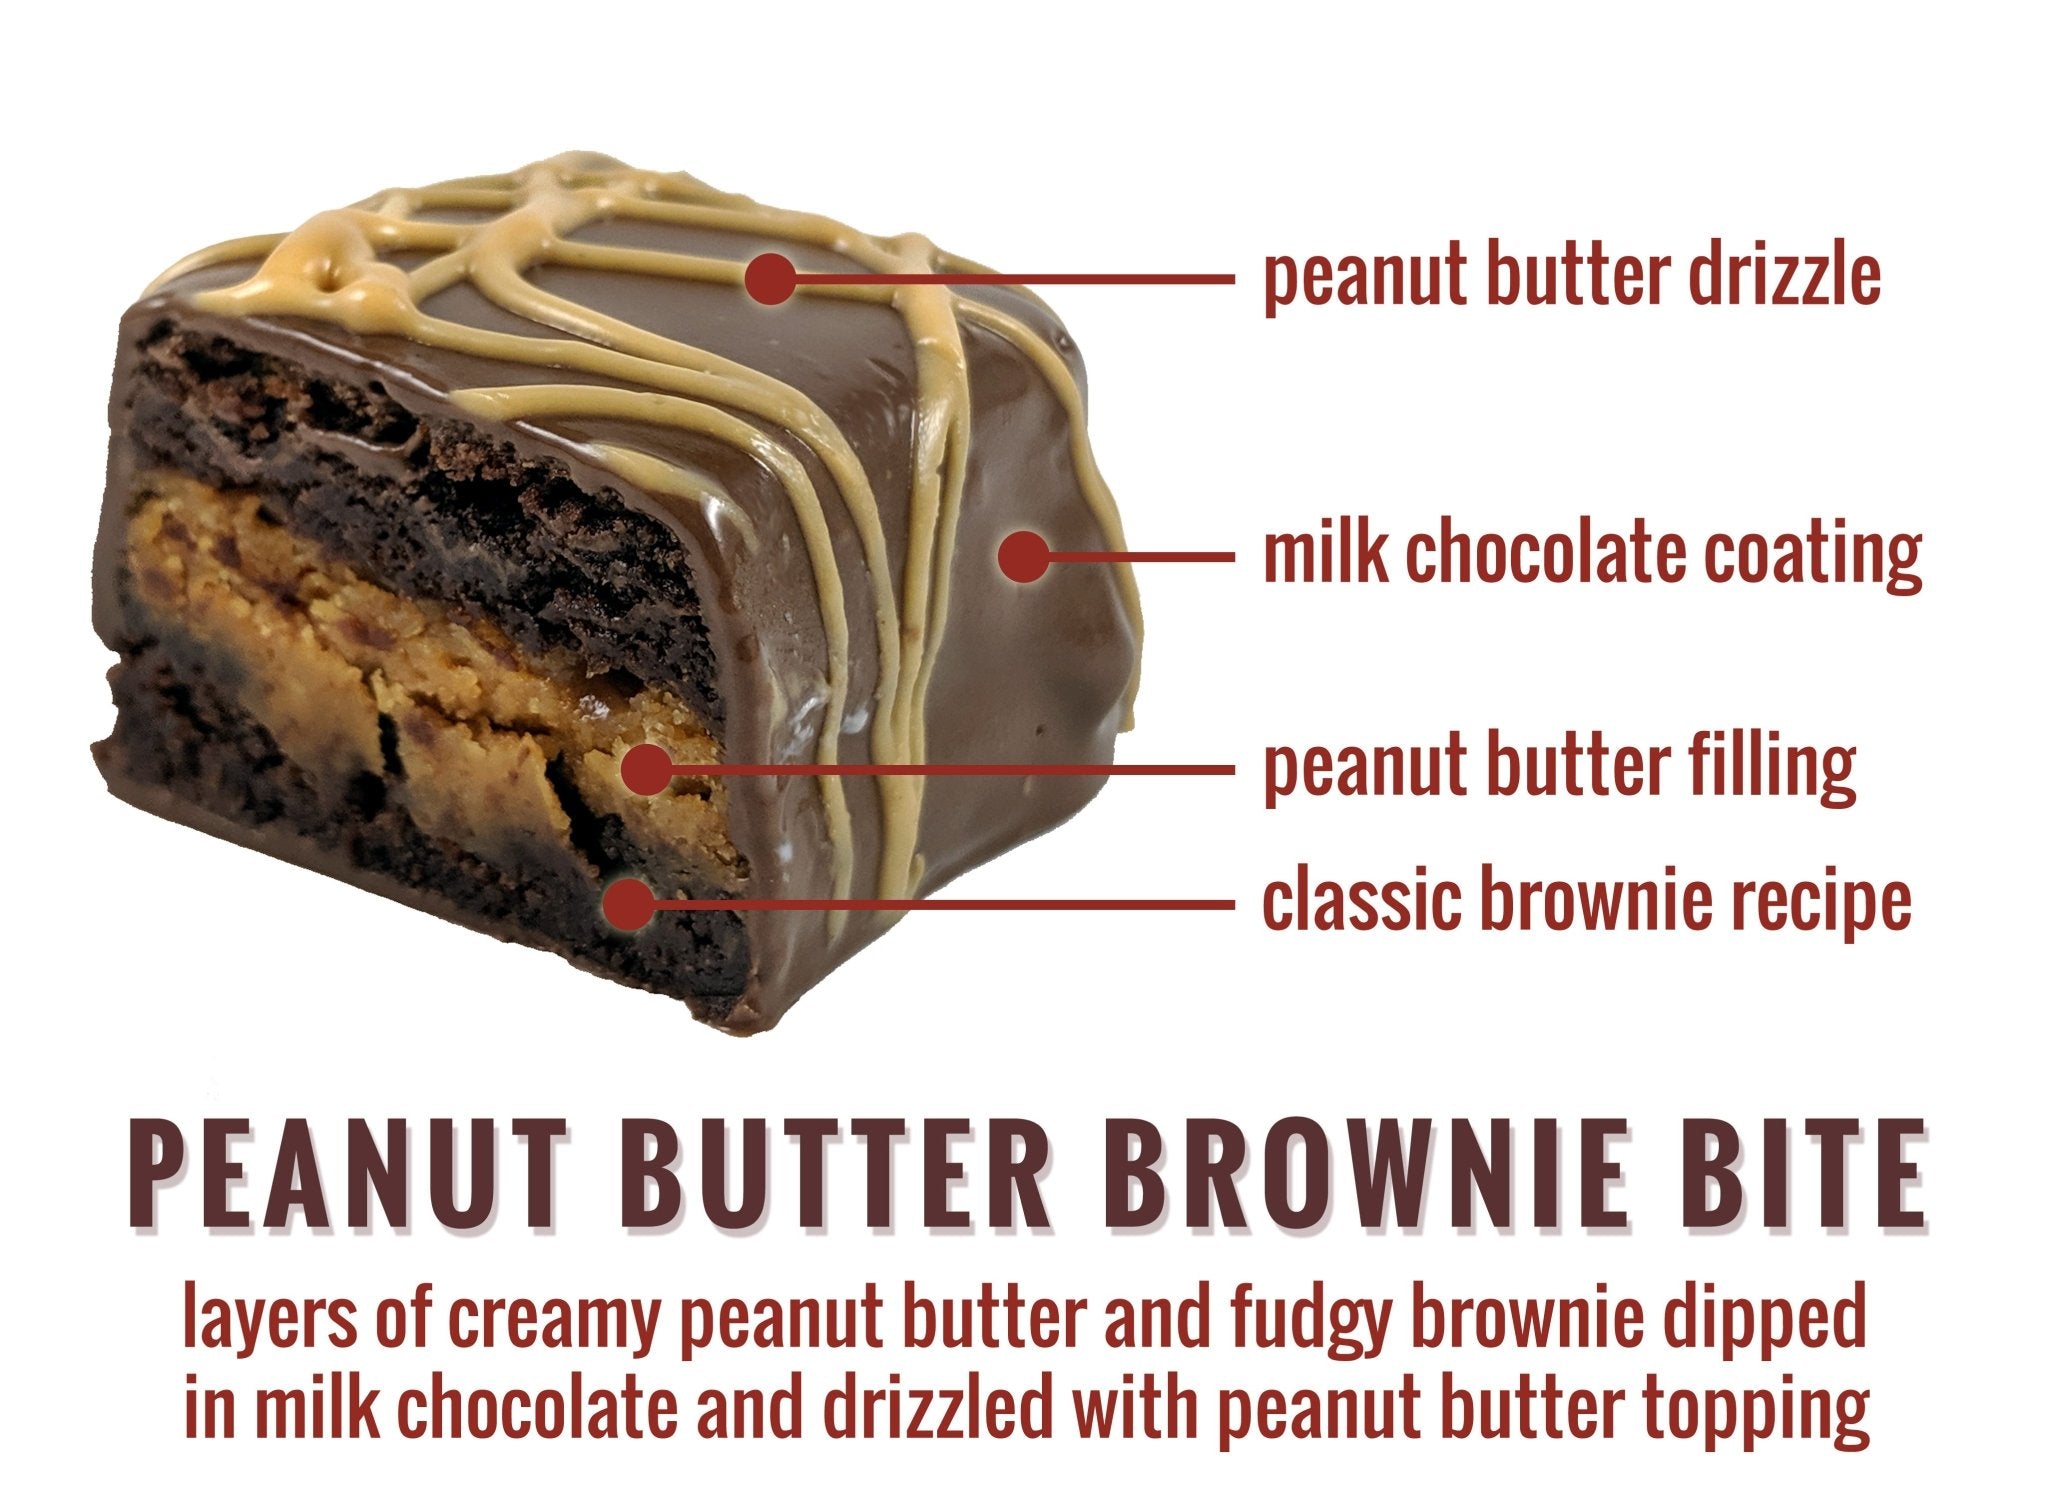 Peanut Butter Brownie Bites - Nettie's Craft Brownies